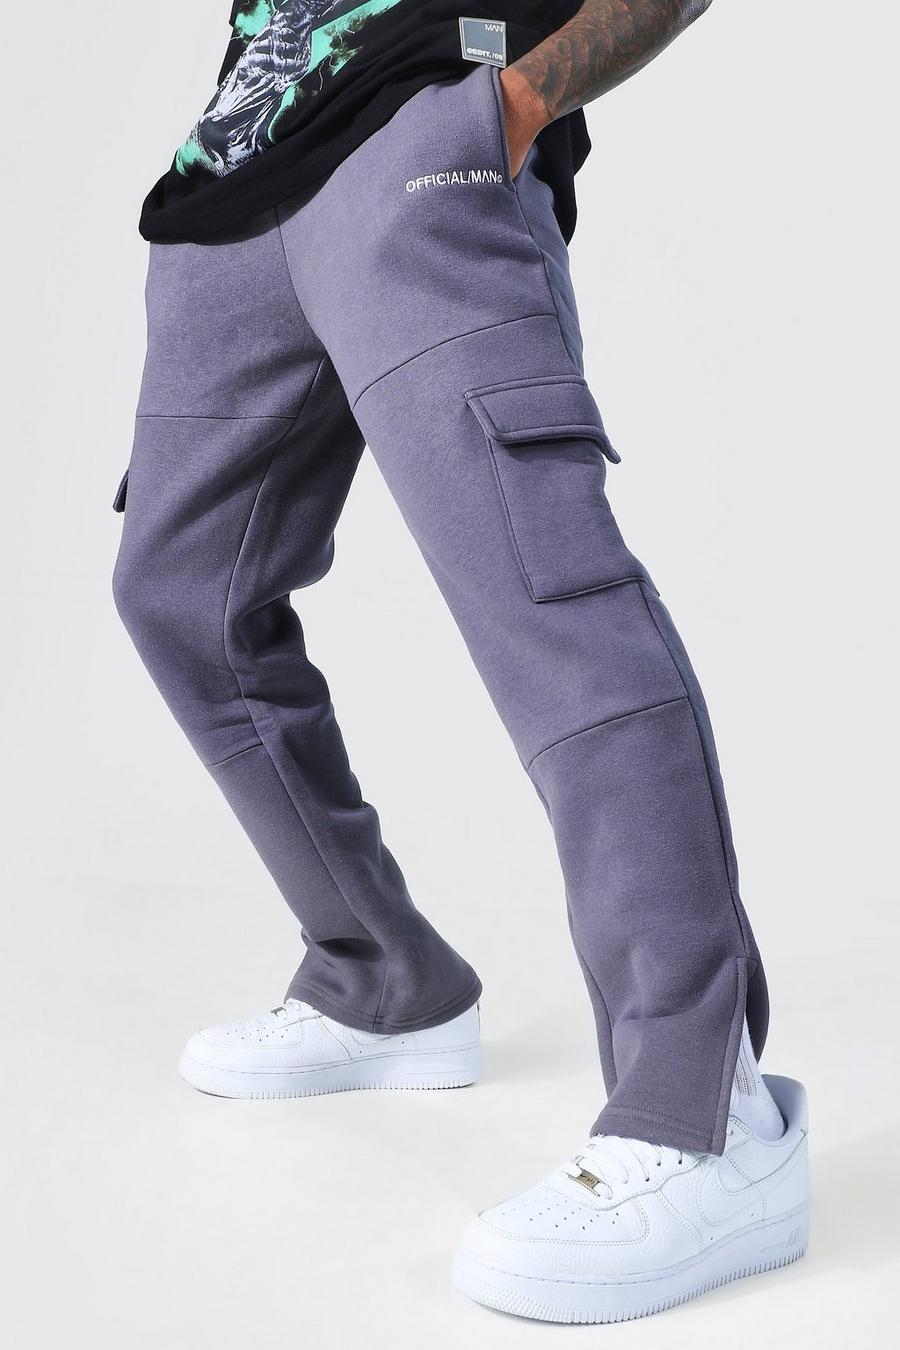 Pantaloni tuta stile Cargo Official taglio comodo con spacco, Charcoal gris image number 1